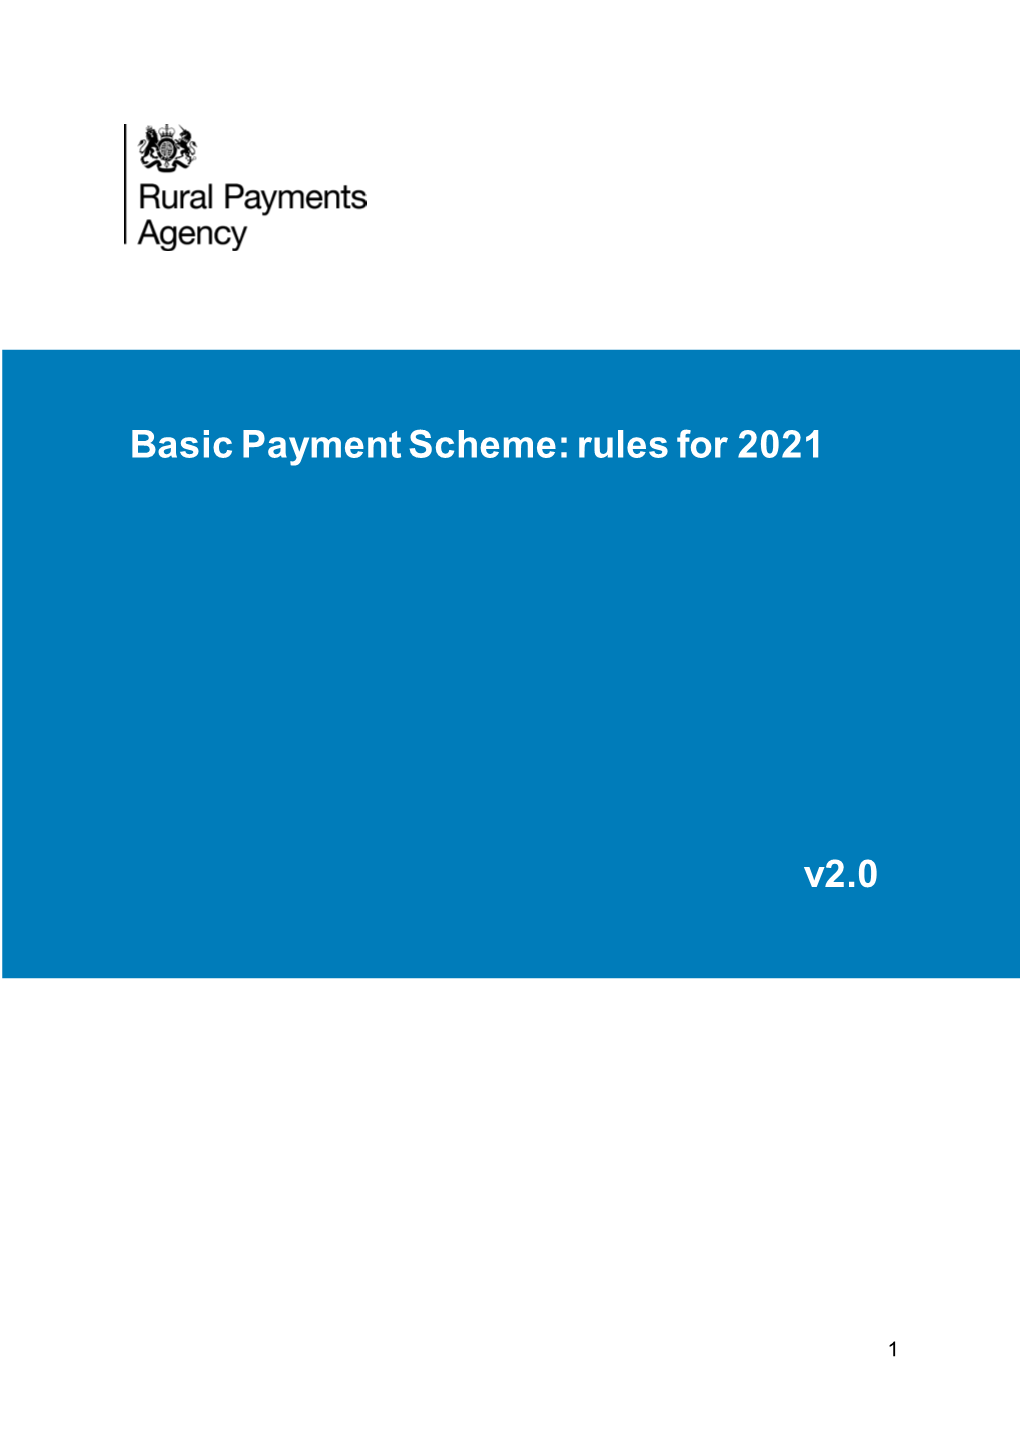 Basic Payment Scheme: Rules for 2021 V2.0